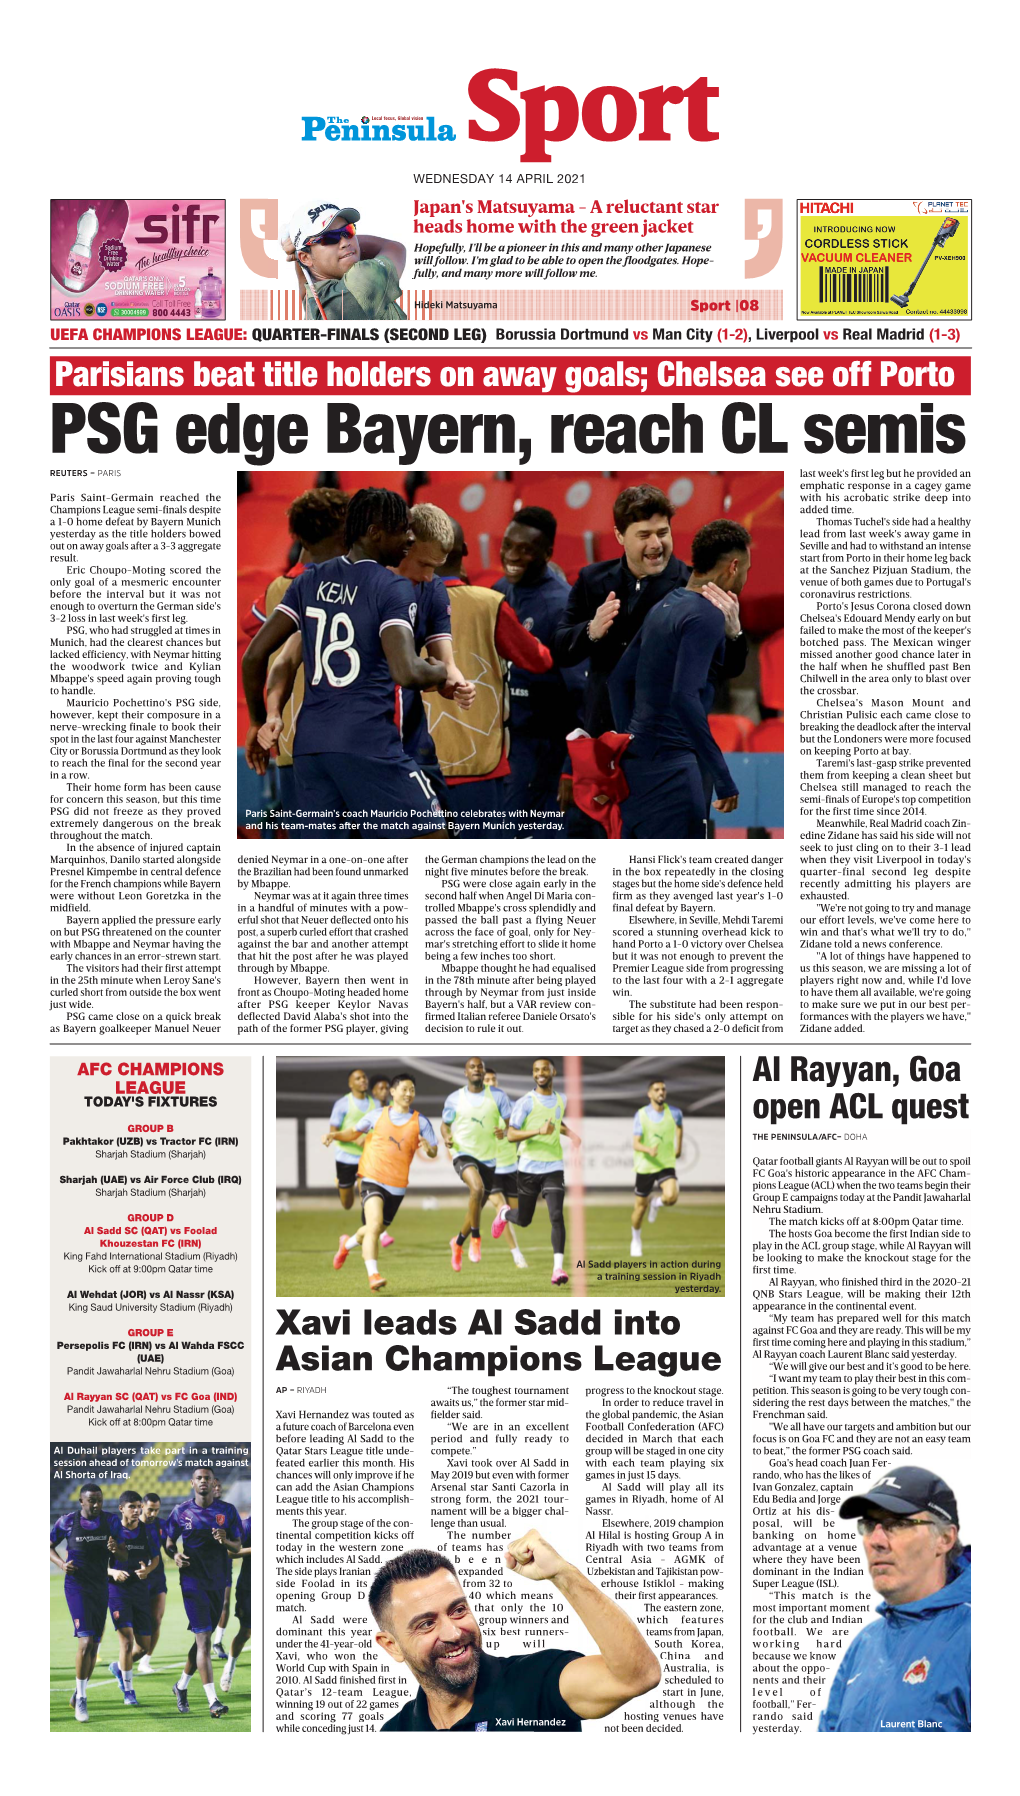 PSG Edge Bayern, Reach CL Semis